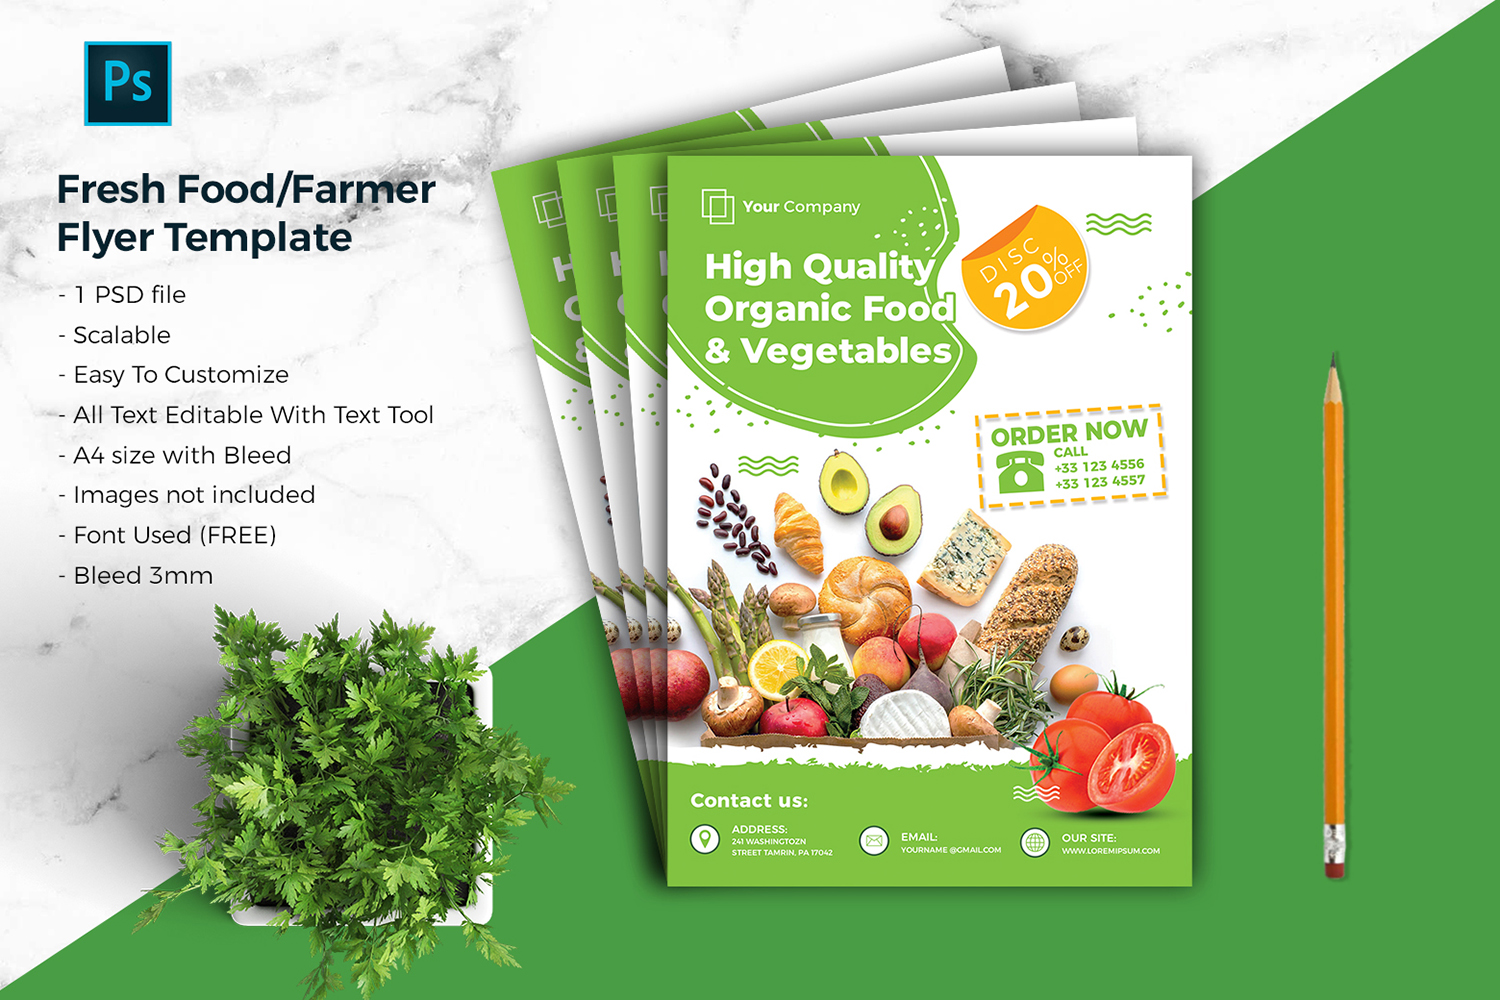 Fressh Food / Farmer Flyer Template Vol-04 Corporate Identity Template